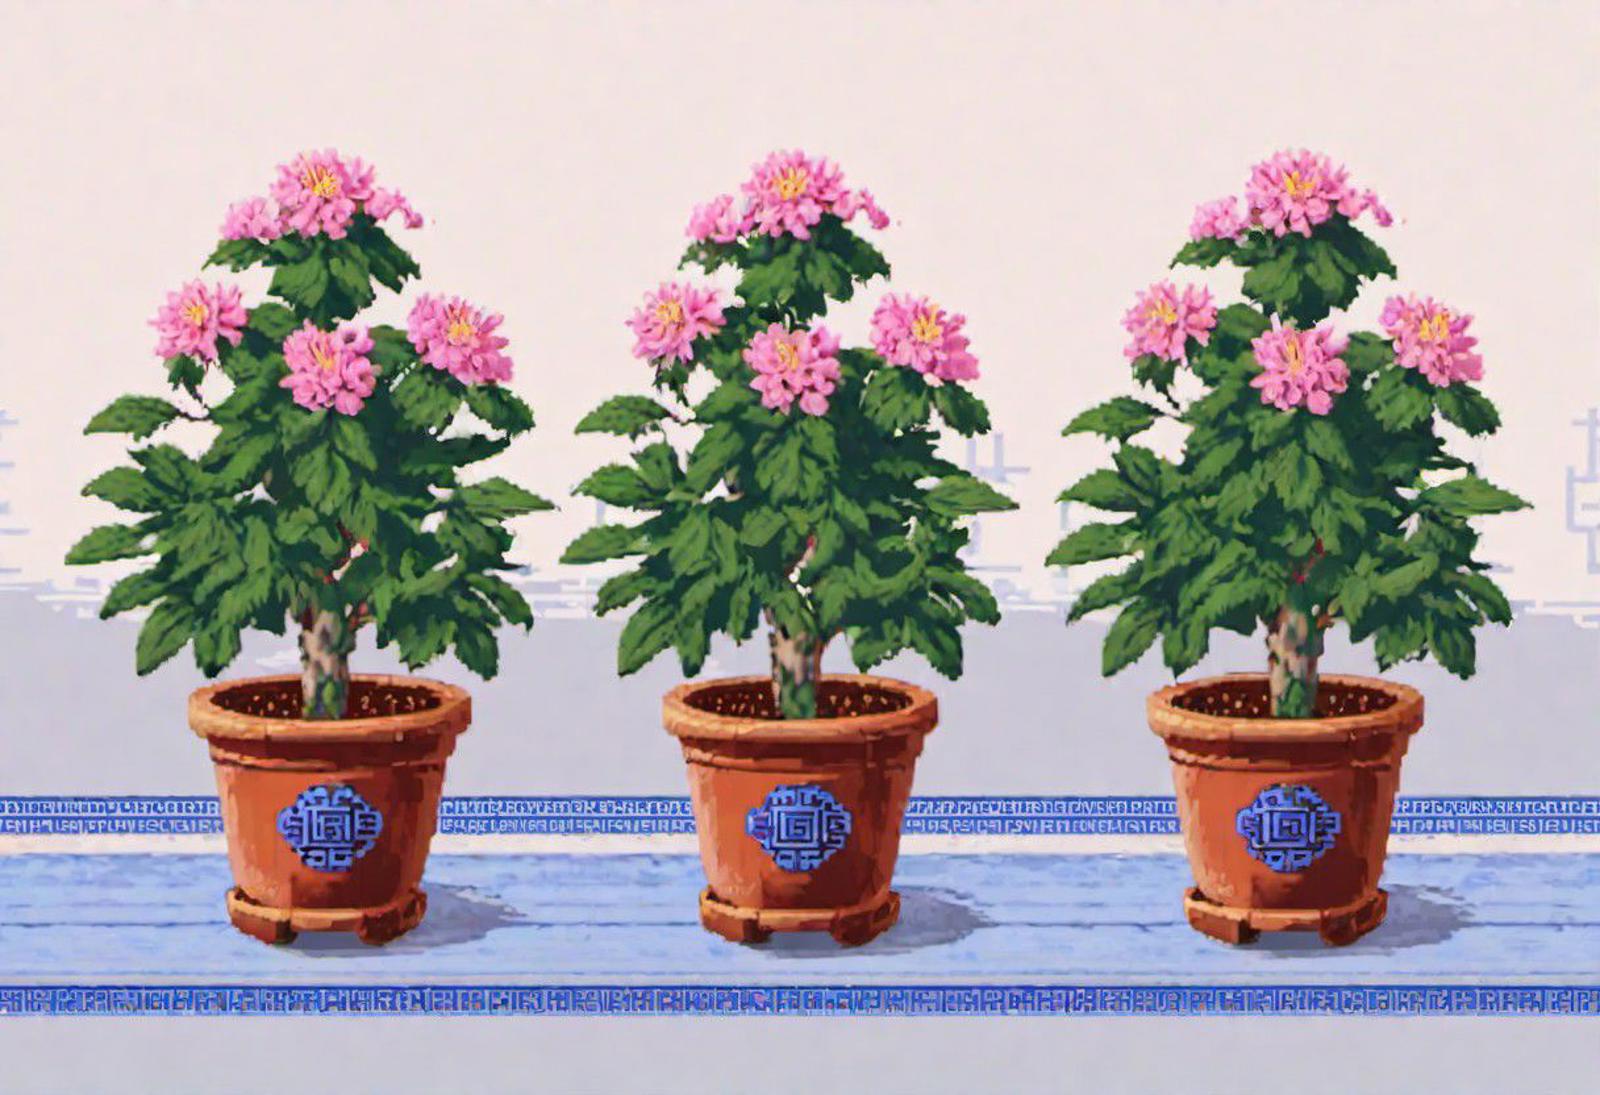 16-bit pixel backgrounds (v2) image by prushik